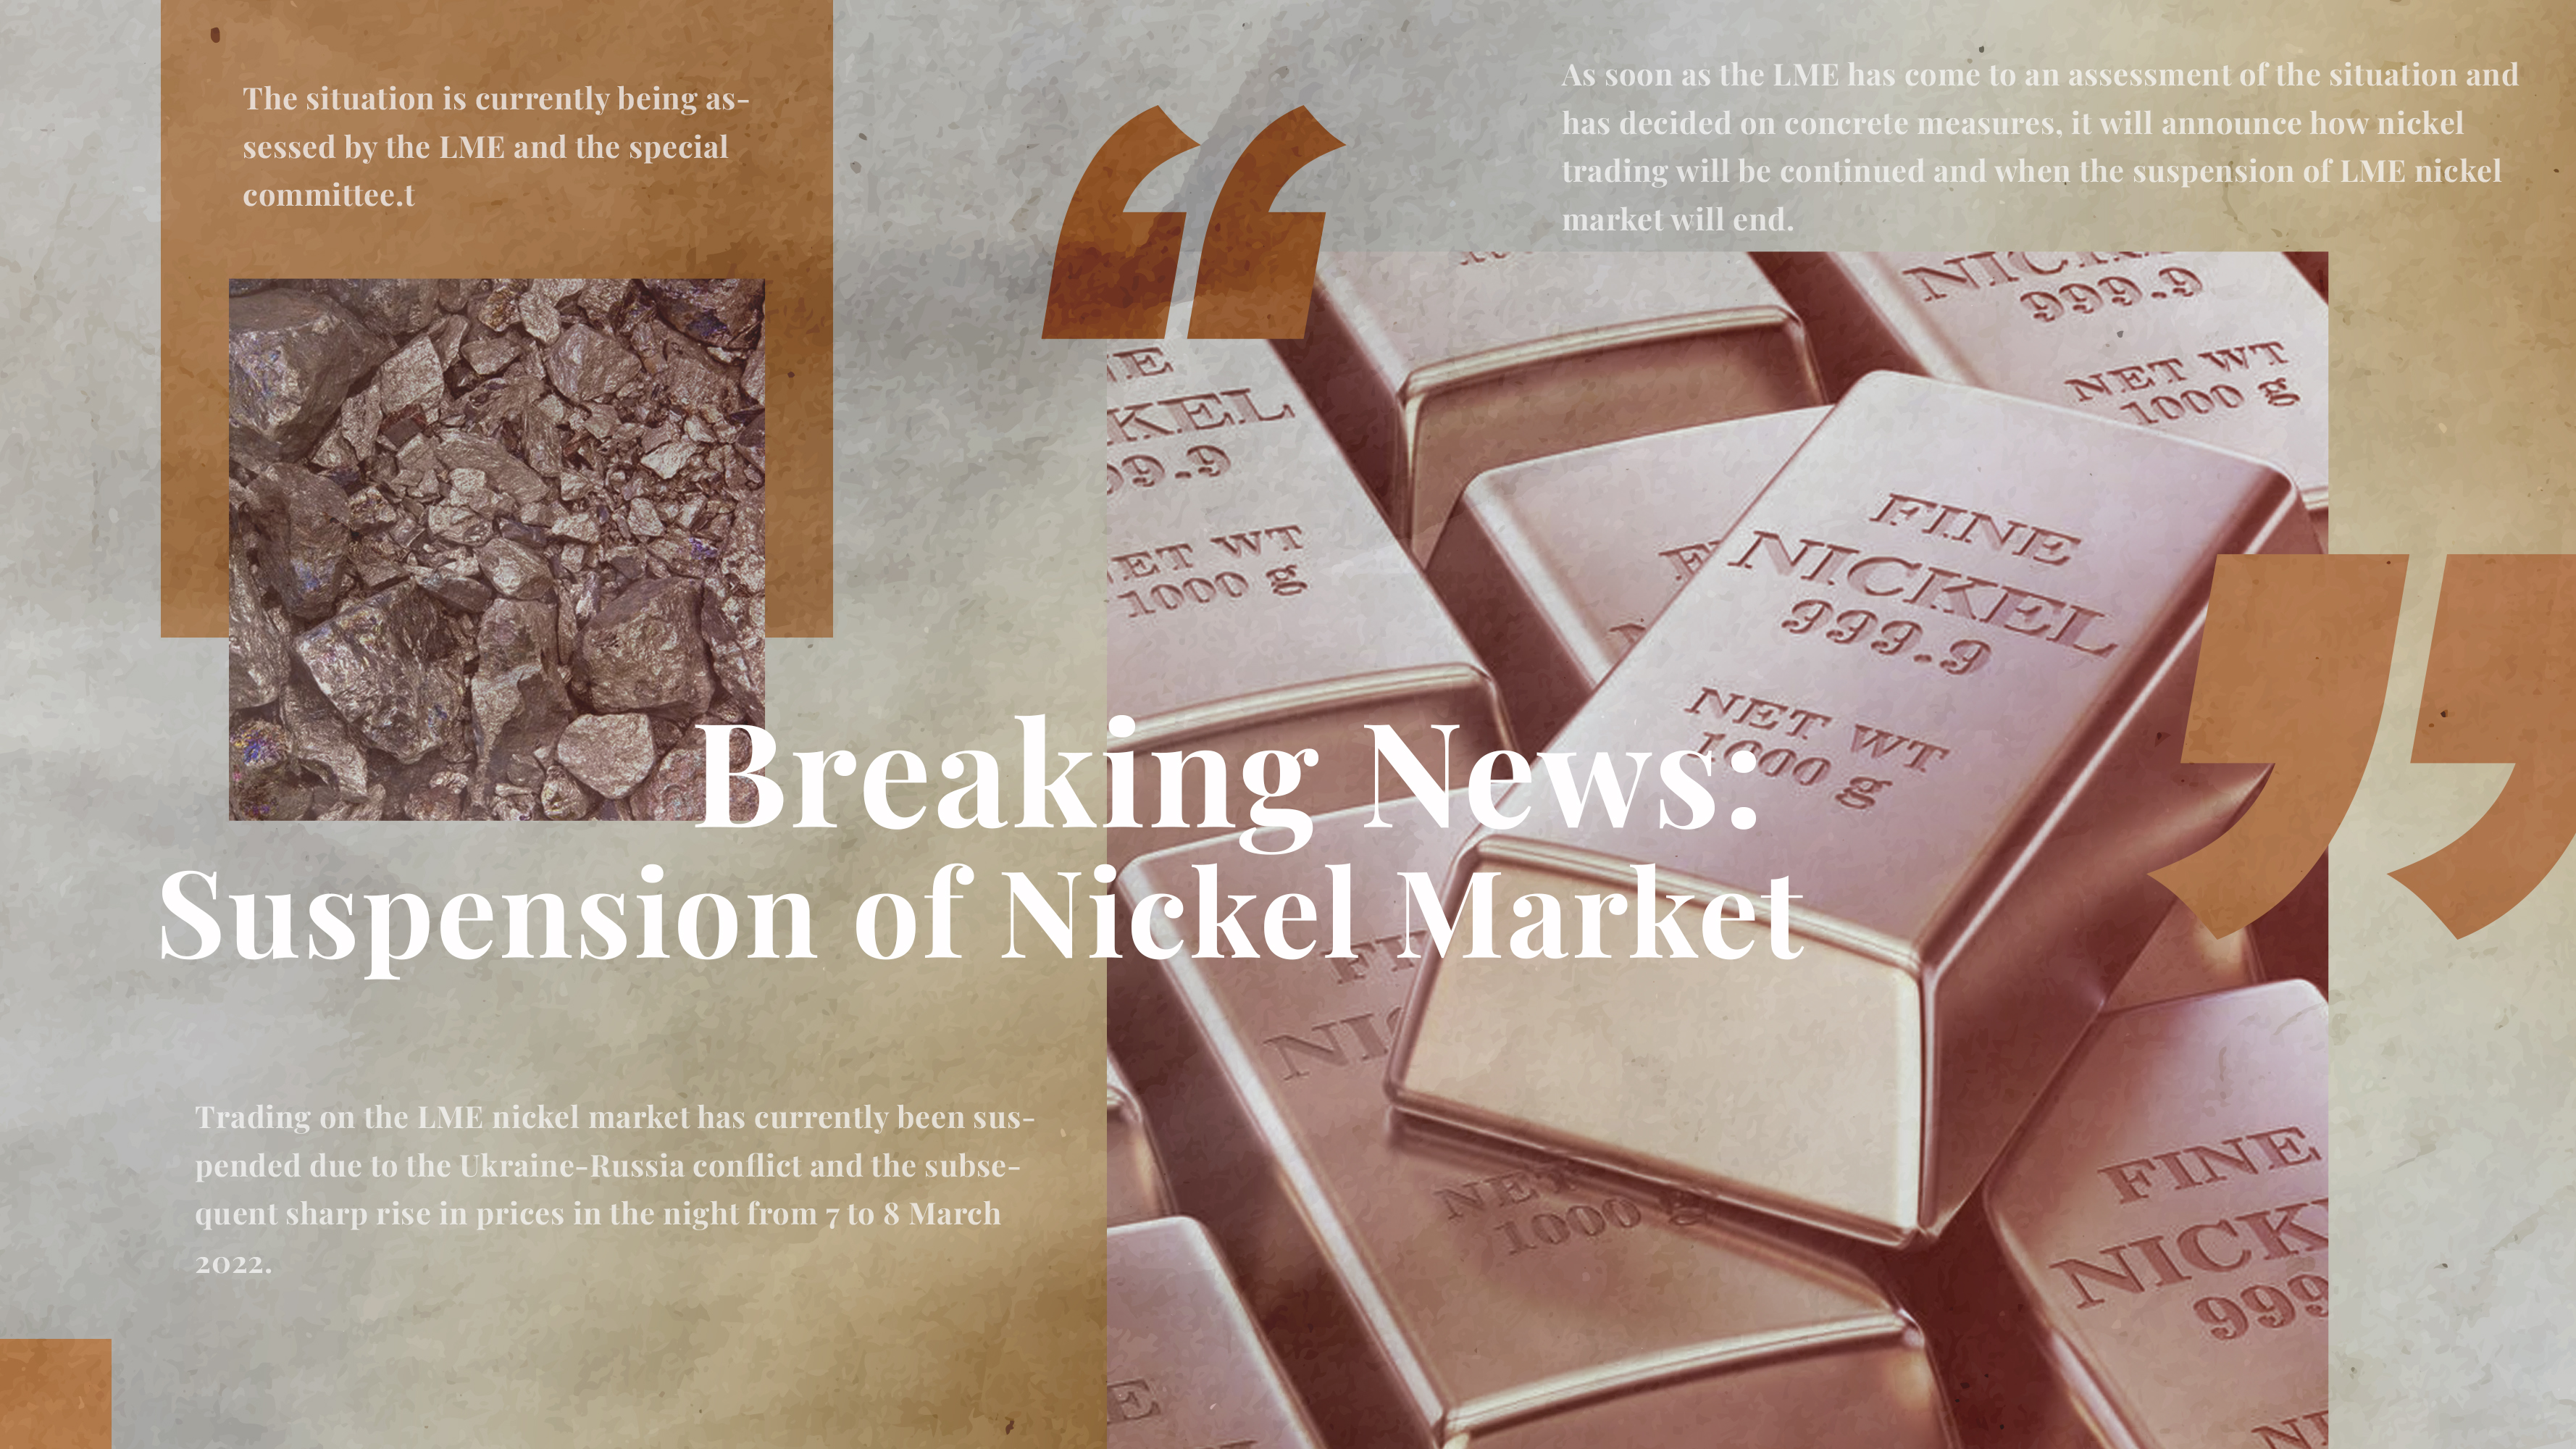 BREAKING NEWS: Suspension of Nickel Market